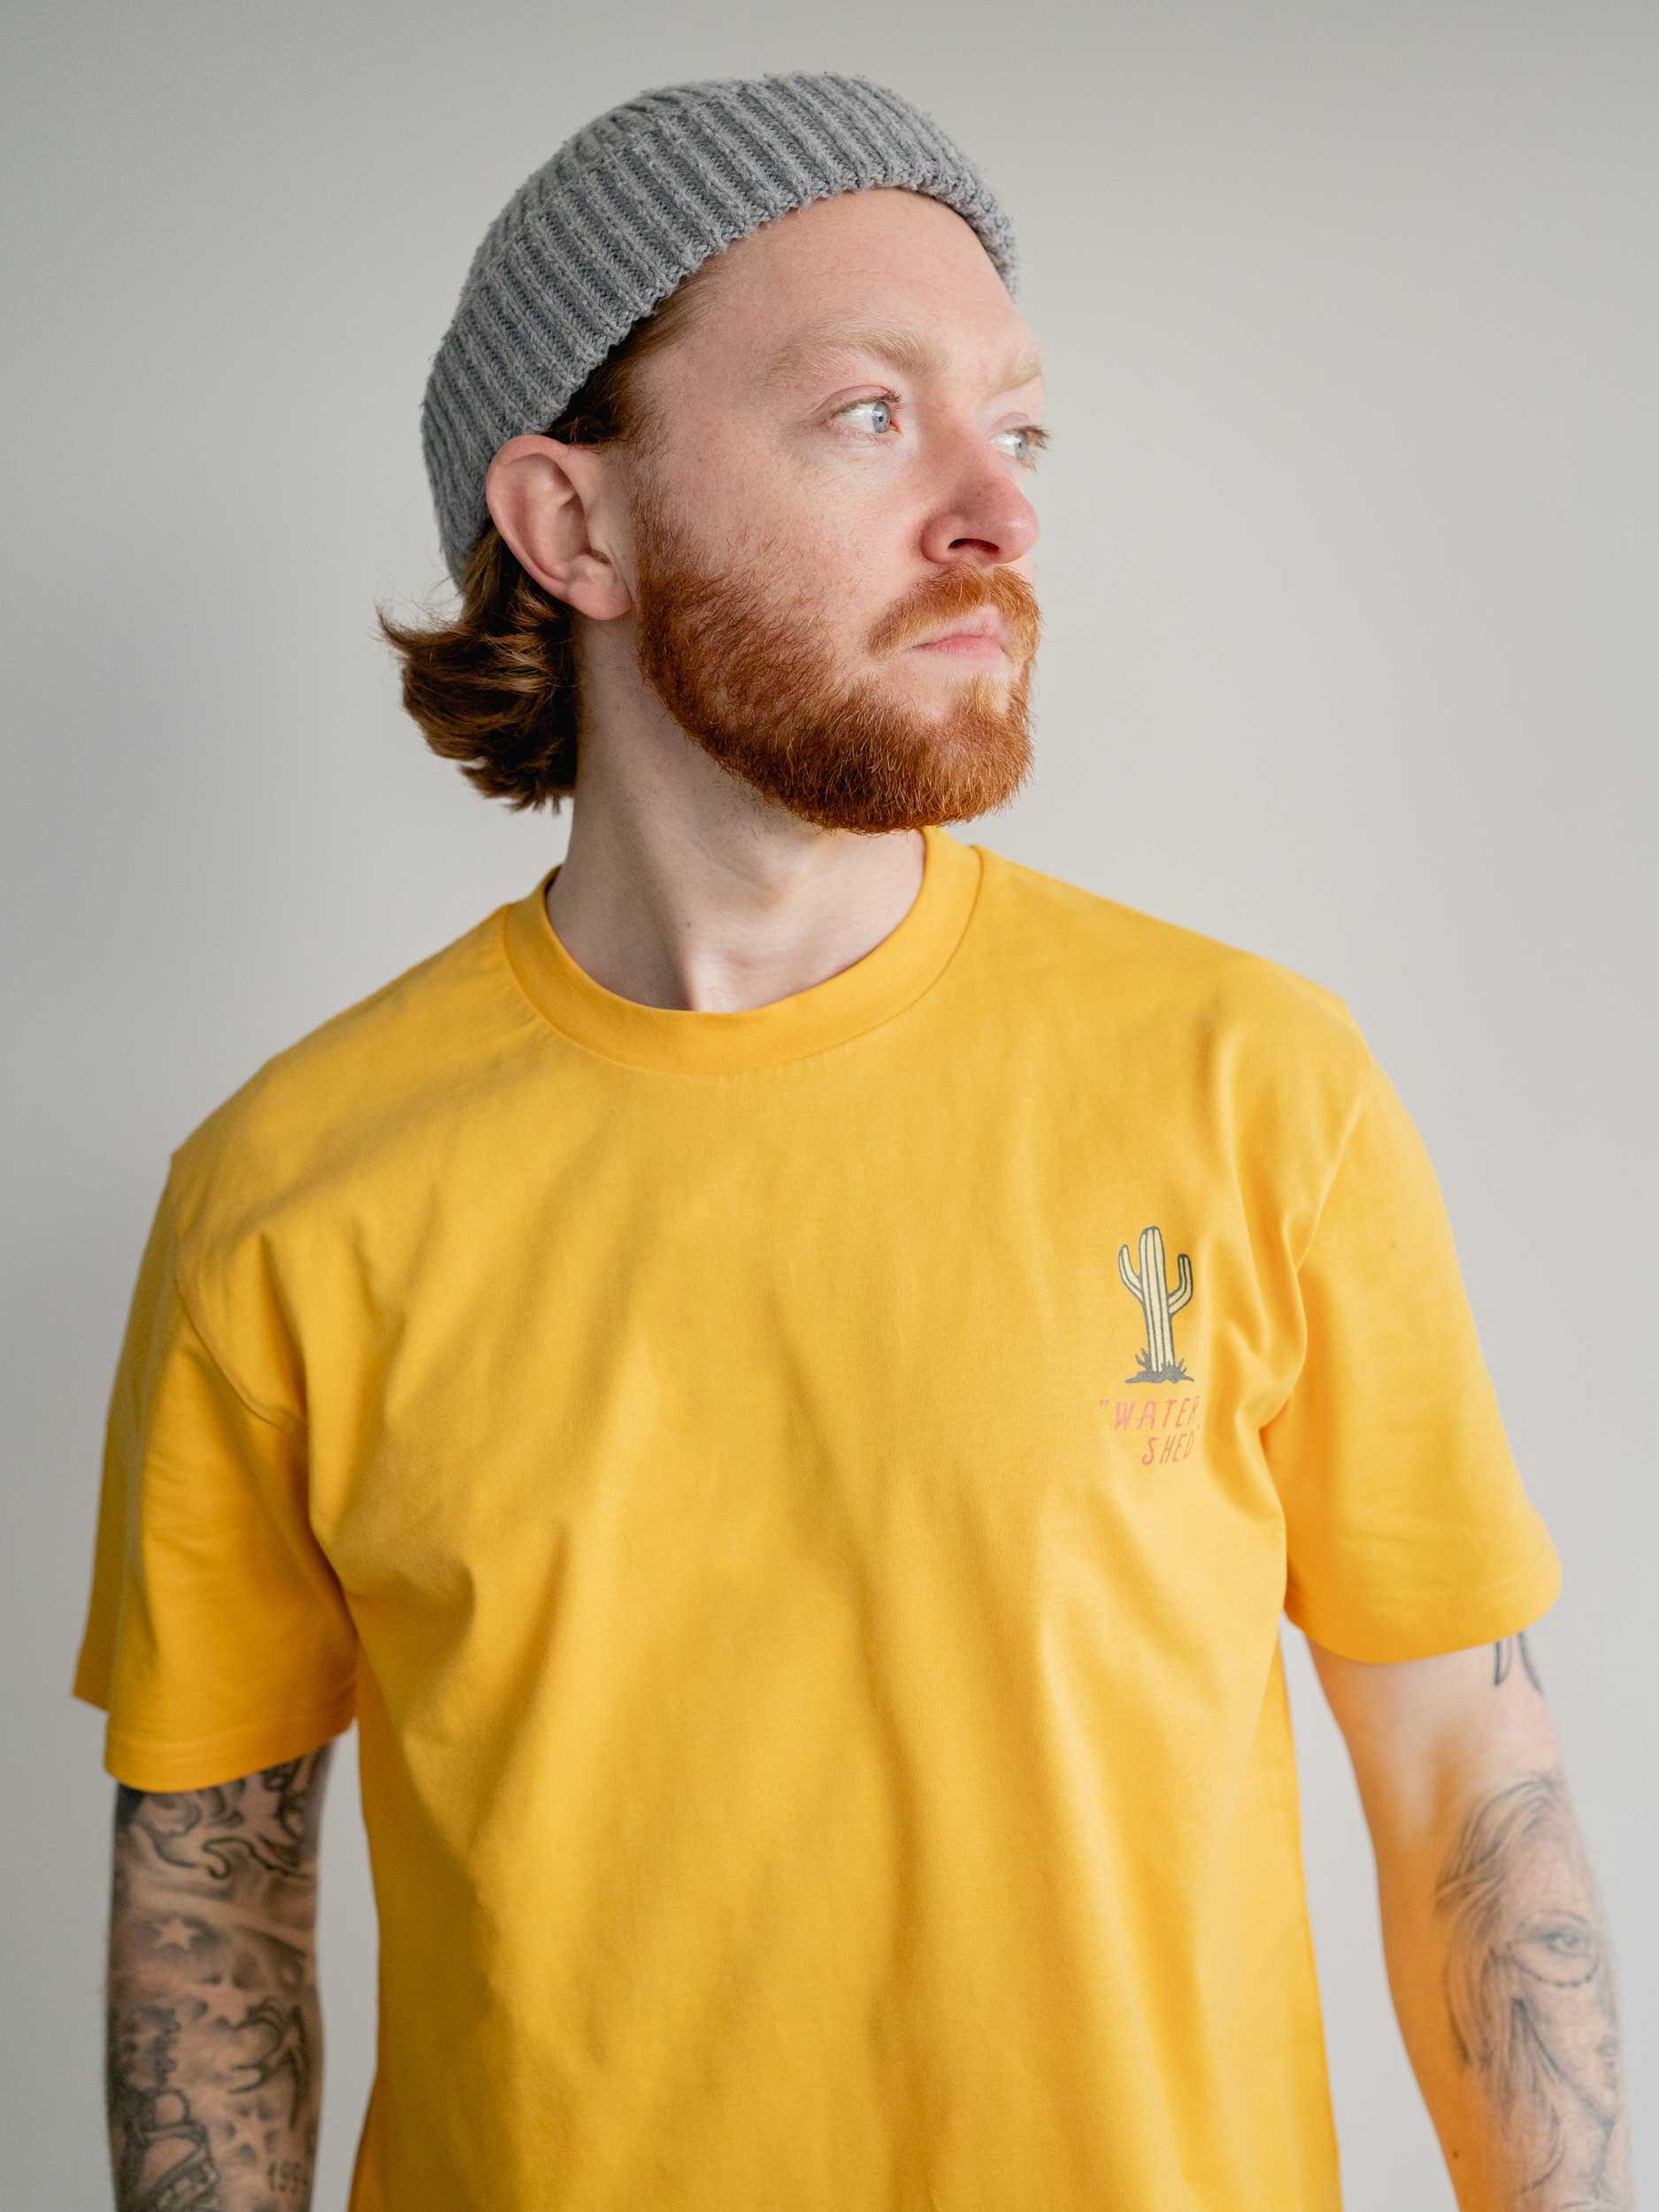 Texas Sun T-Shirt - Watershed Brand